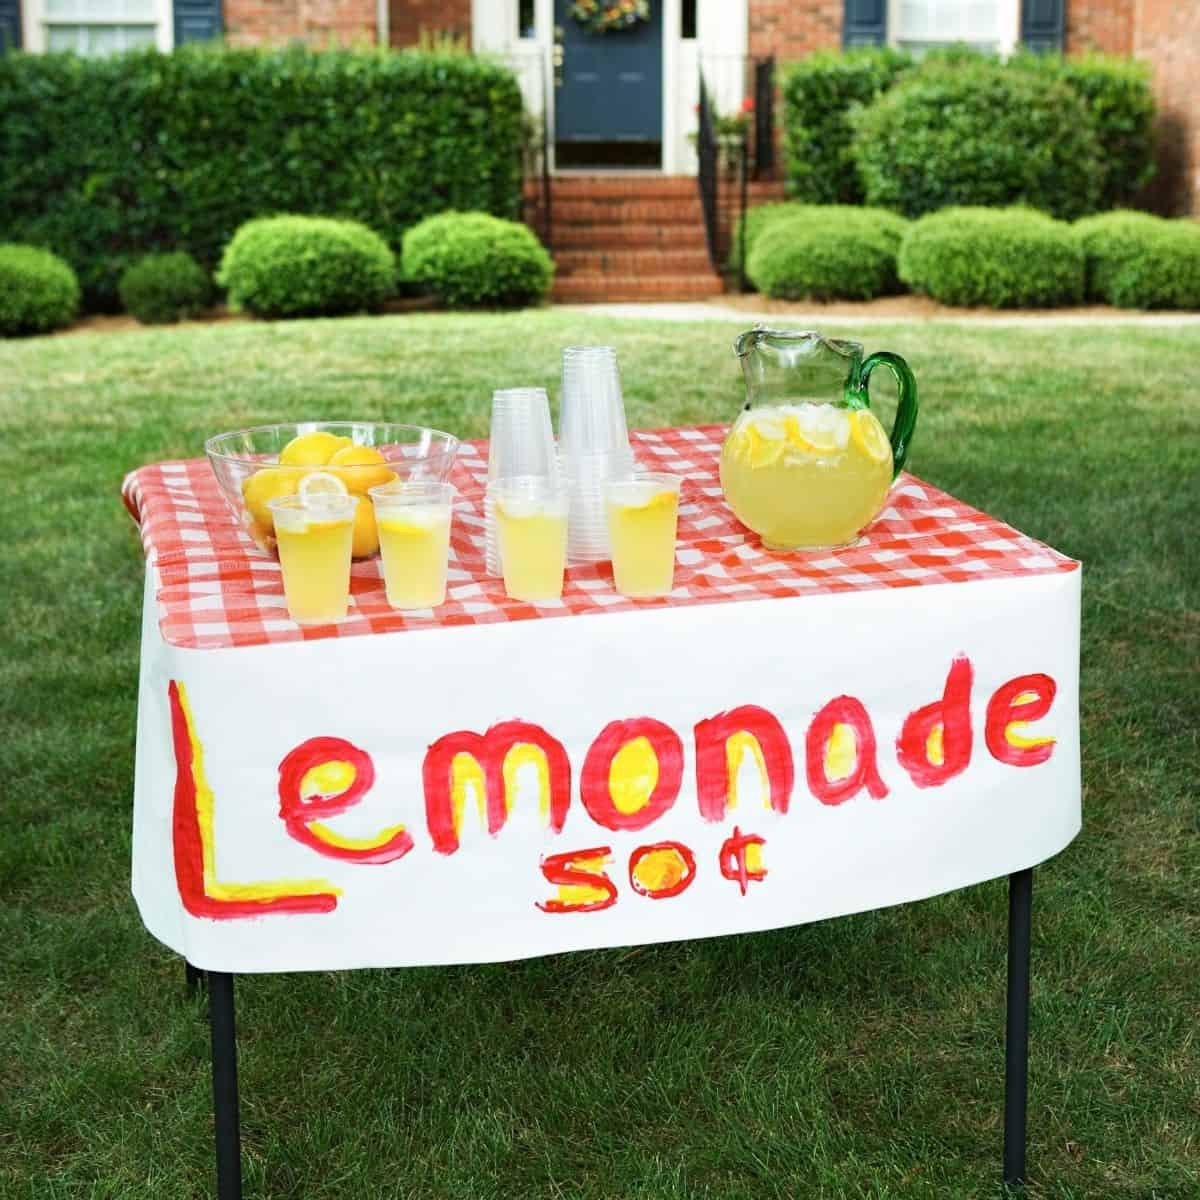 dumb laws and victimless crimes - lemonade stand - Lemonade 50